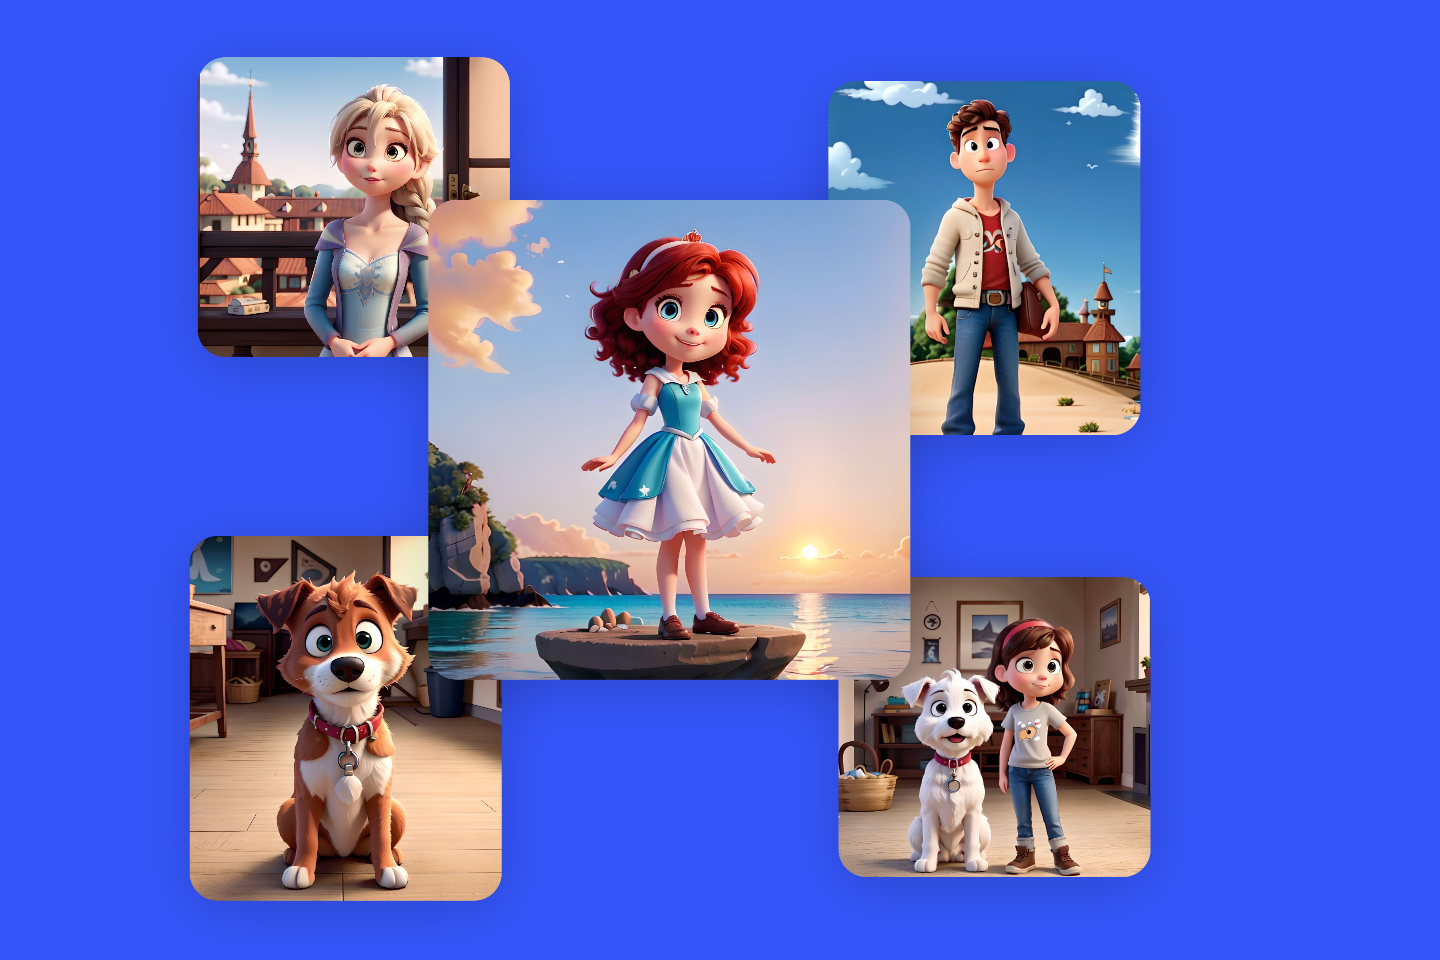 Five disney pixar style images made by fotor disney pixar ai generator